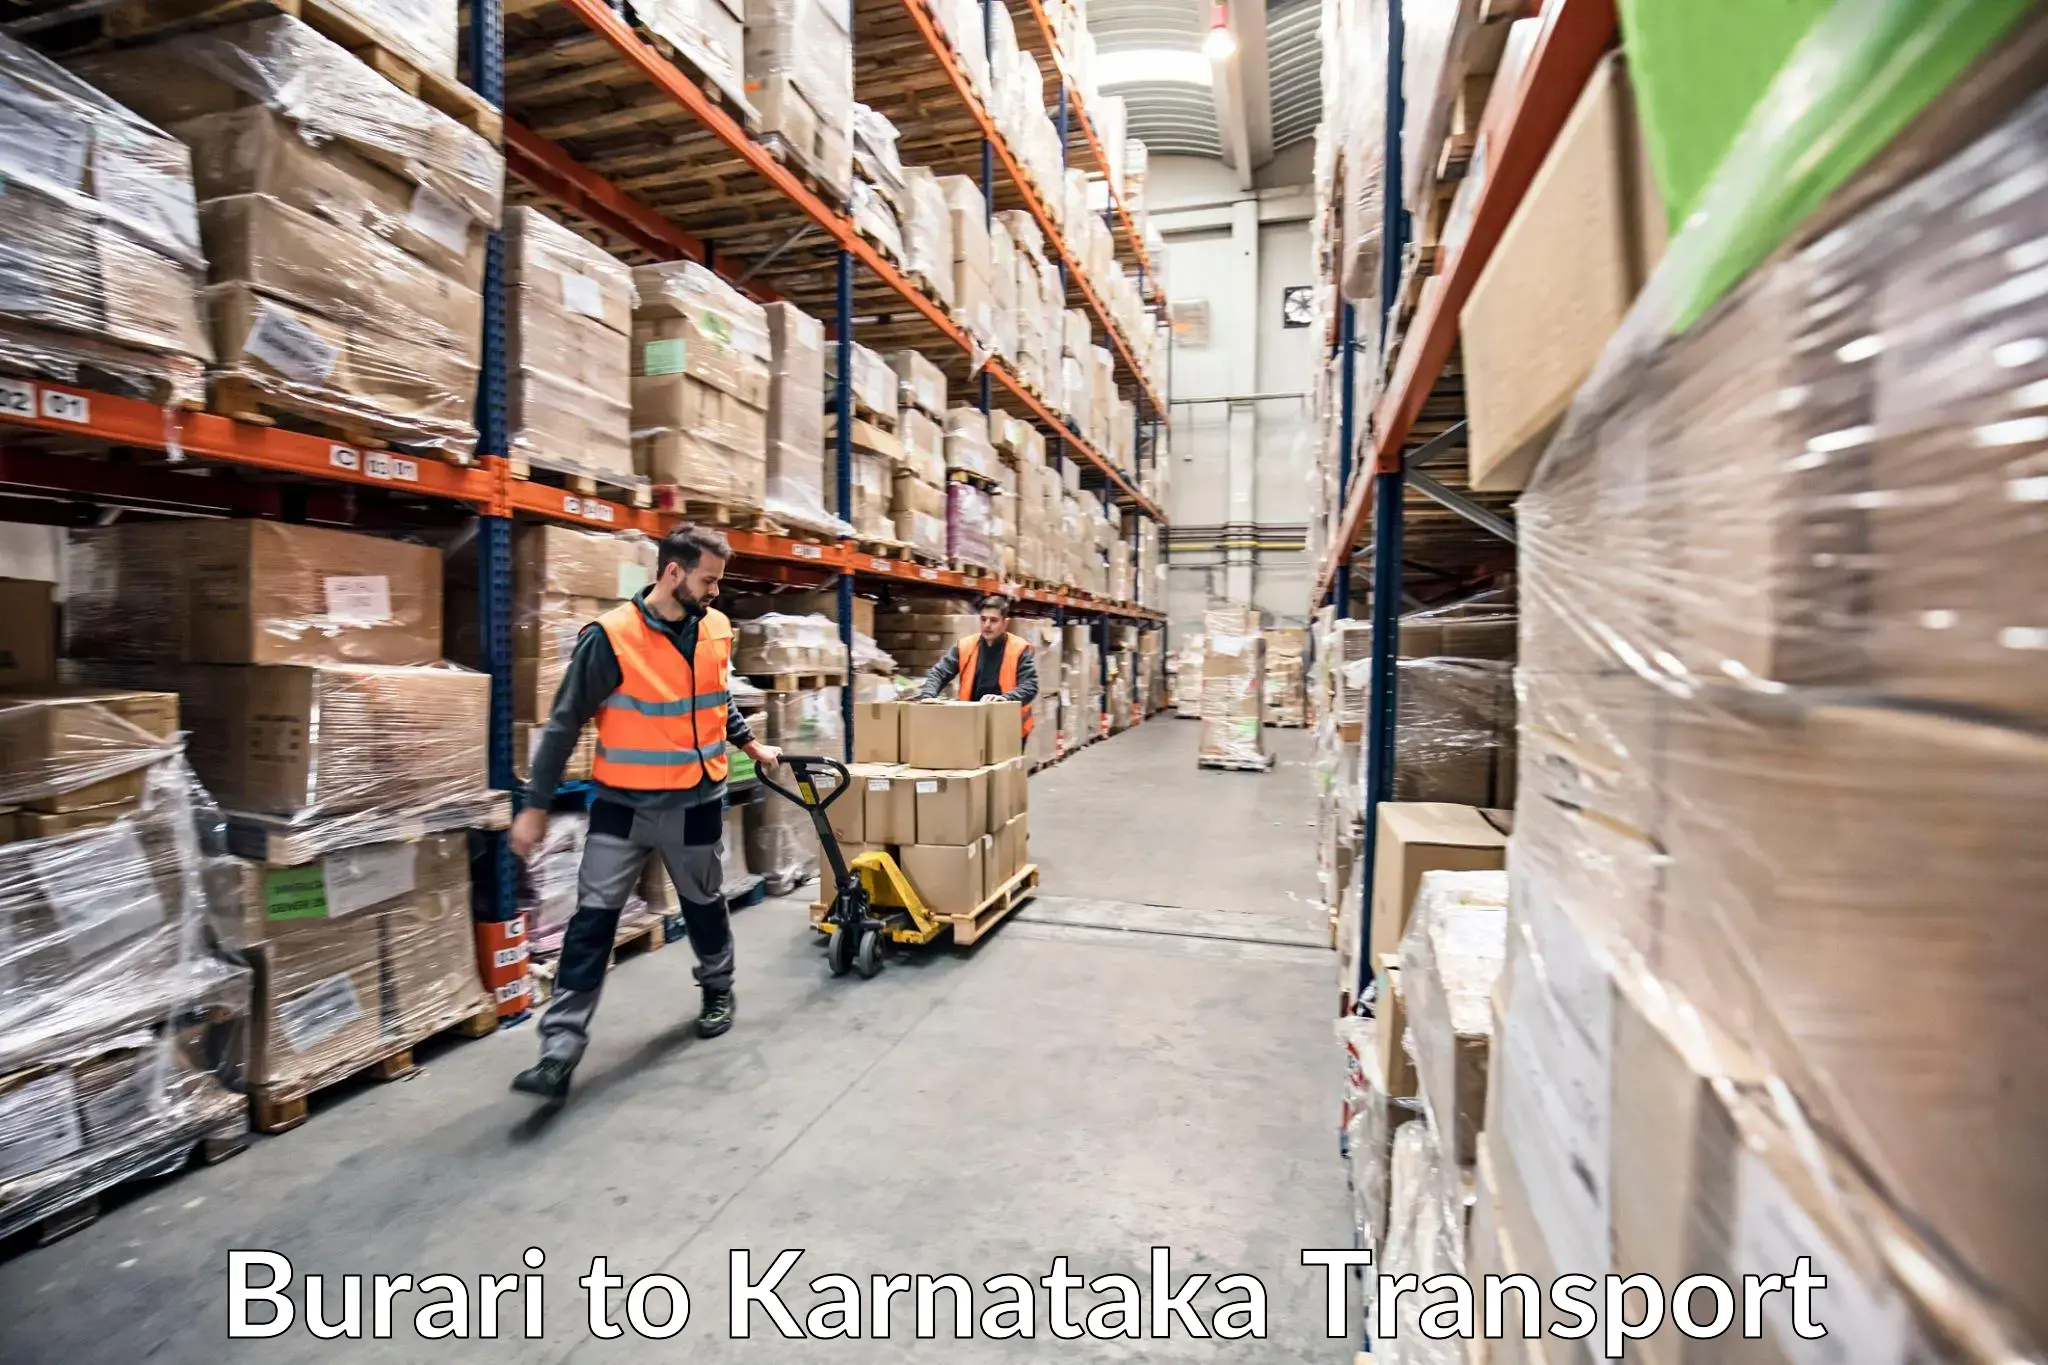 Truck transport companies in India Burari to Toranagallu